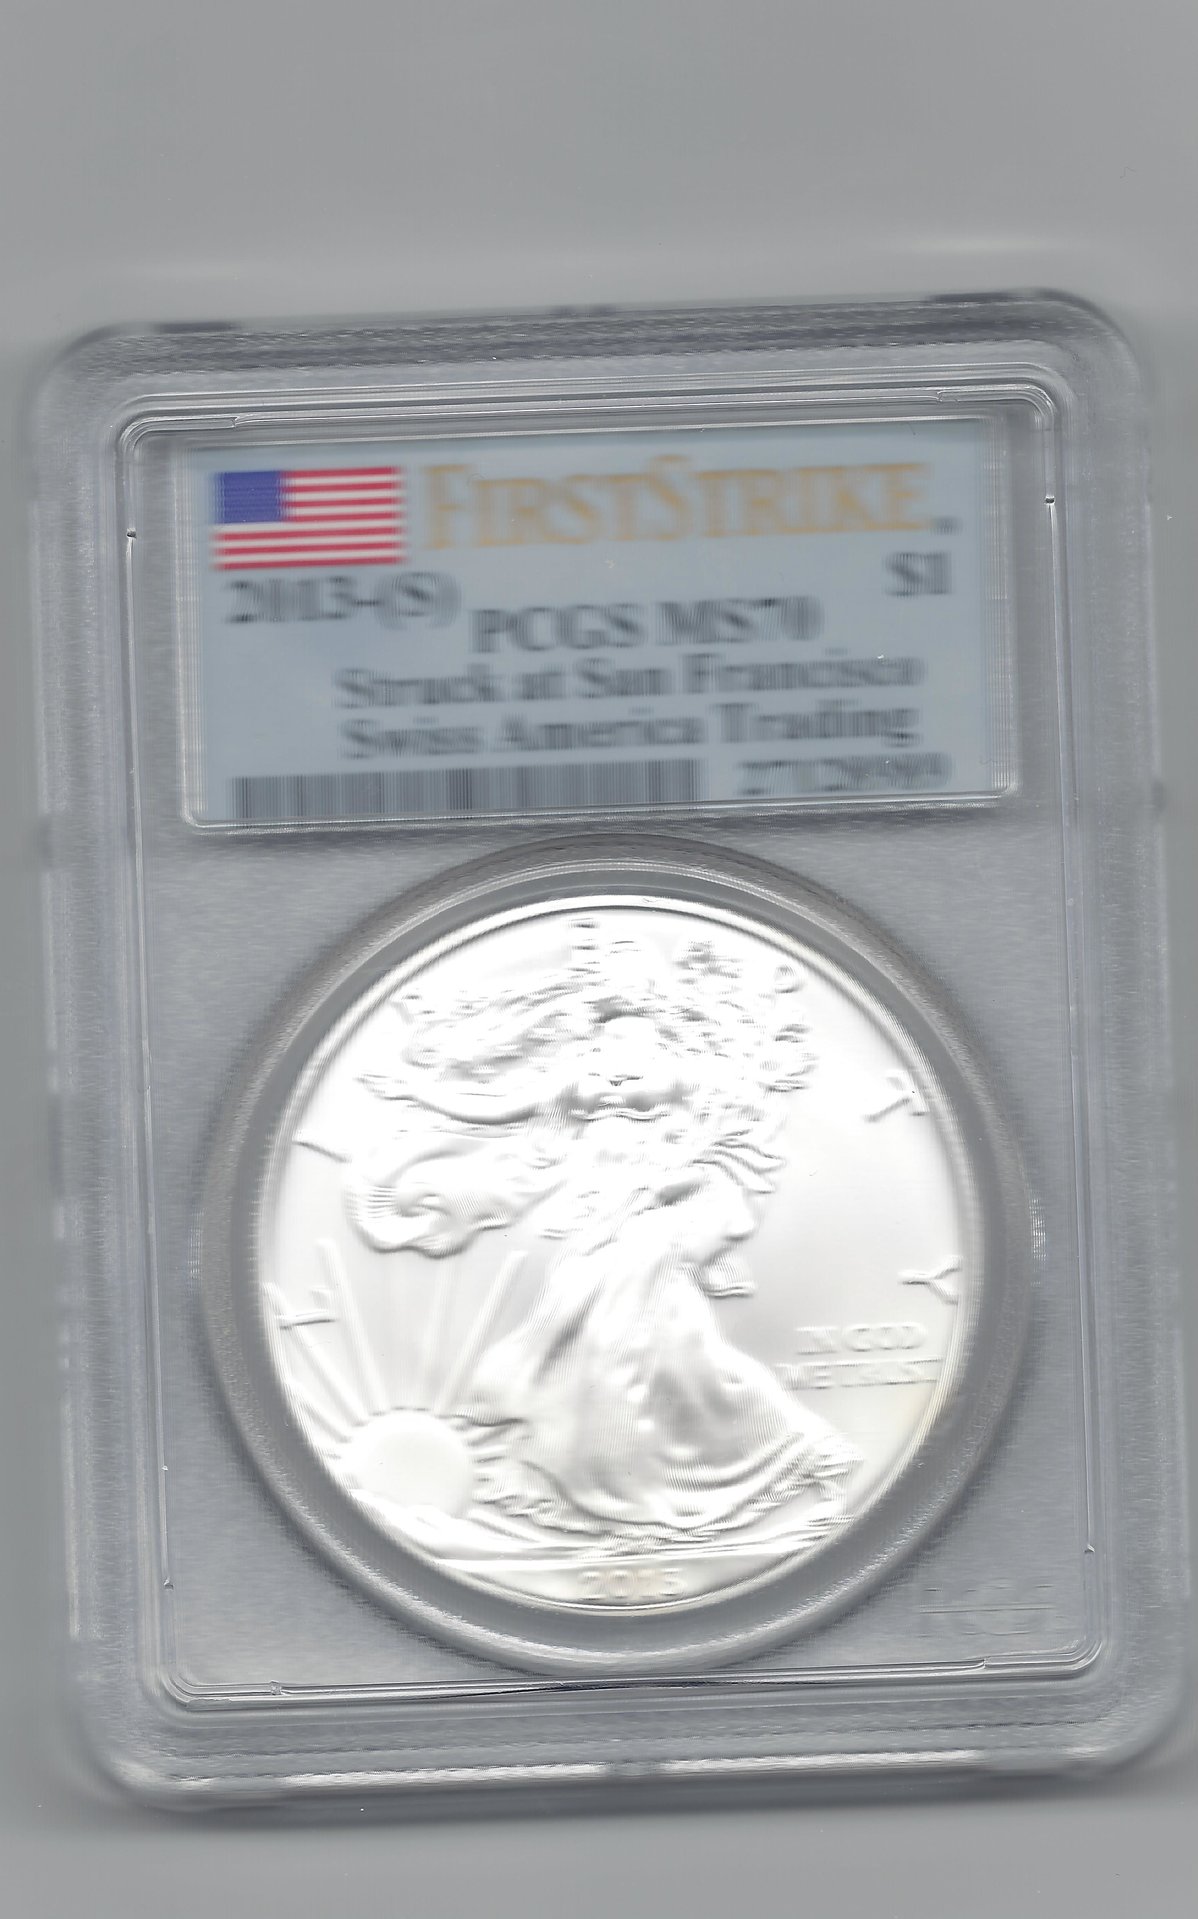 2013-s silver eagle.jpg